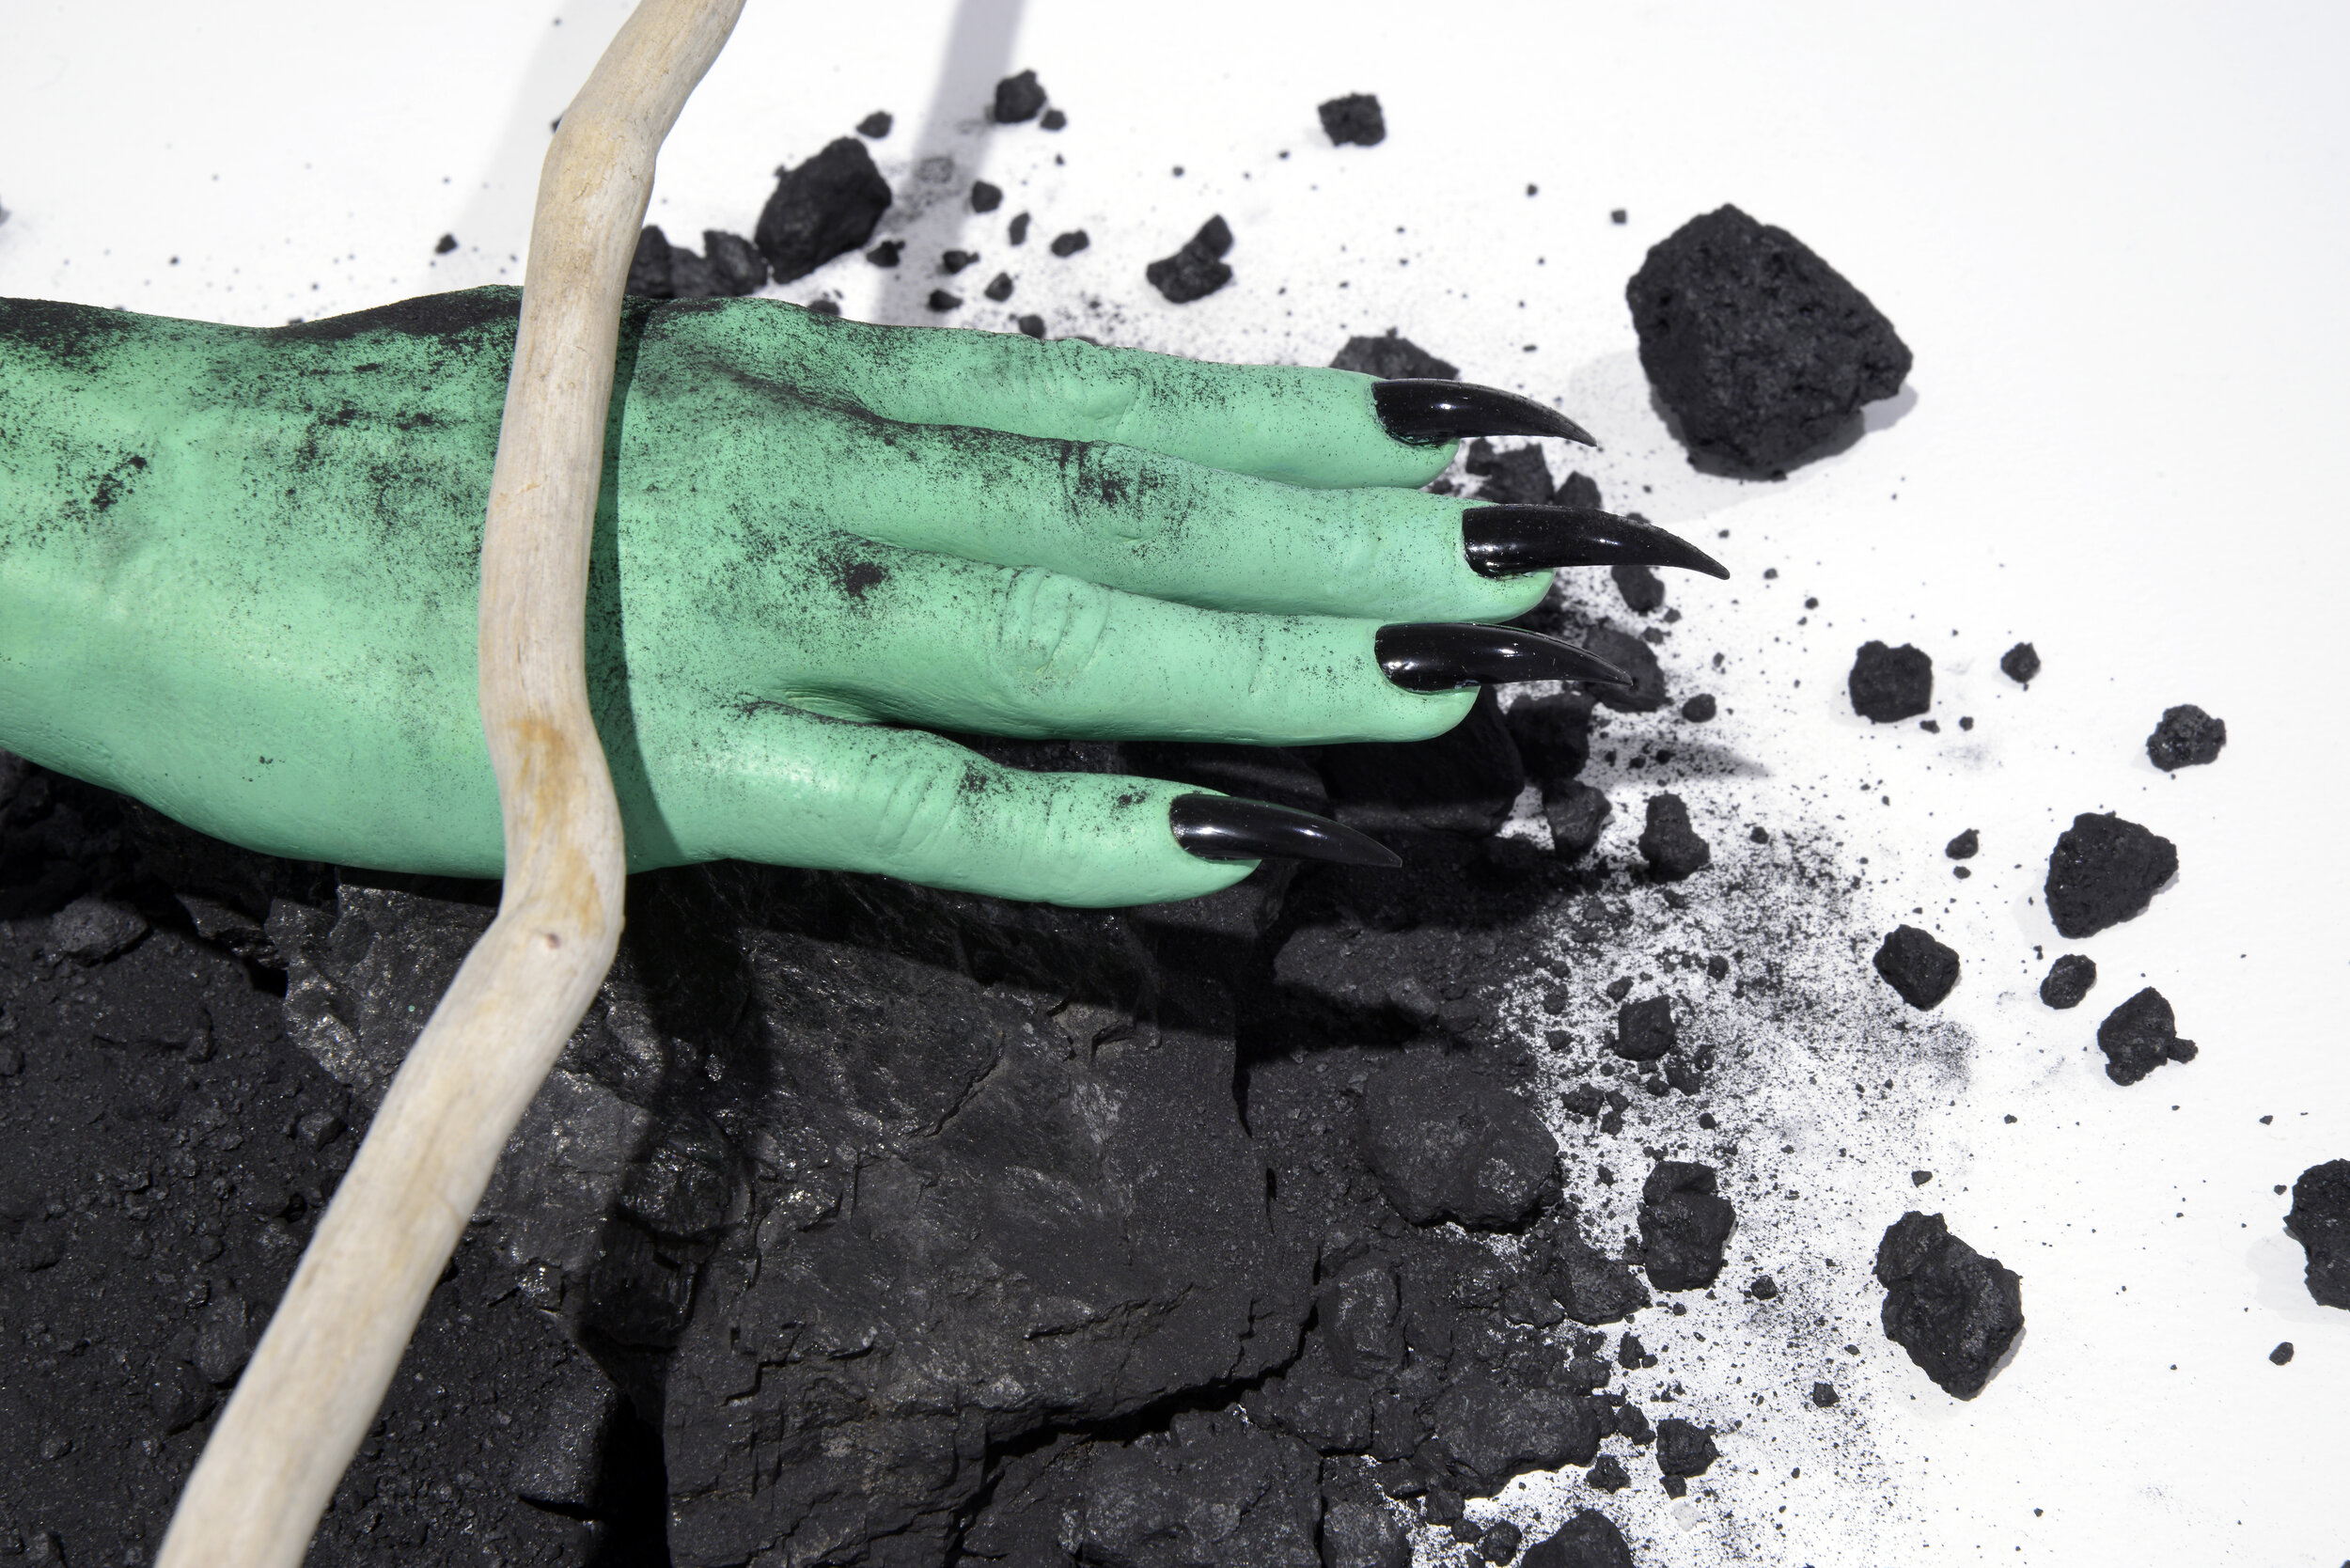  Alana Bartol,  Coal Futures (detail) , 2021, Hydrostone, acrylic paint, false nails, nail polish, coal, petroleum coke, core sample, dowsing rods.  